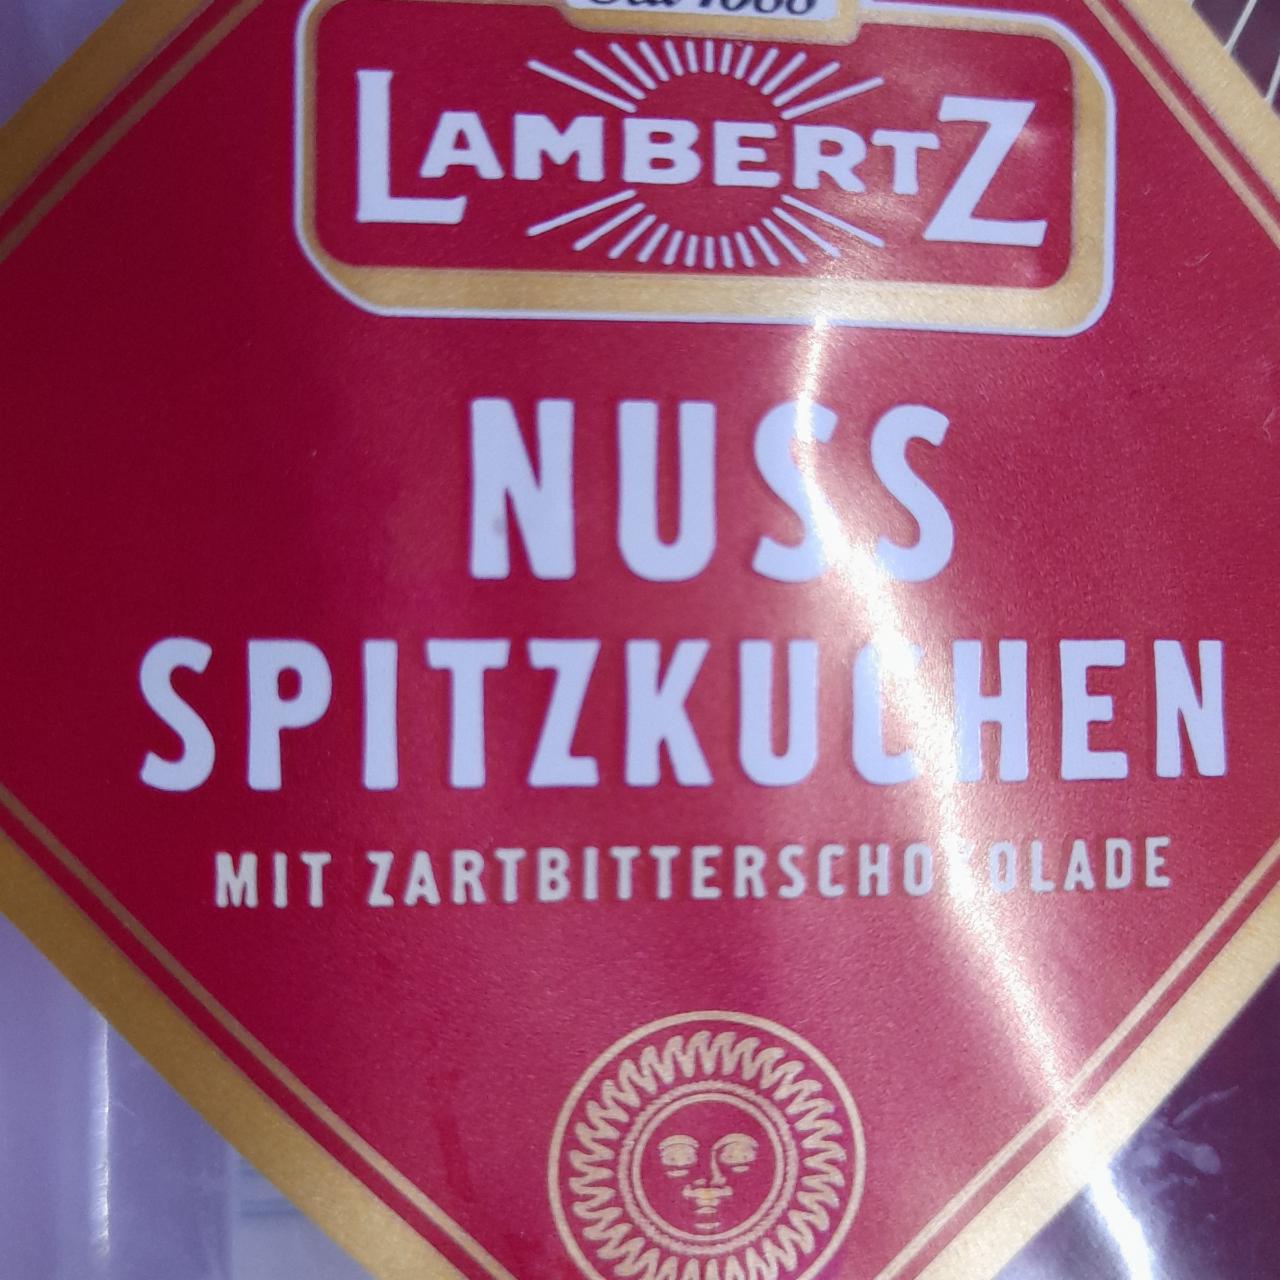 Fotografie - Nuss Spitzkuchen mit Zartbitterschokolade LambertZ